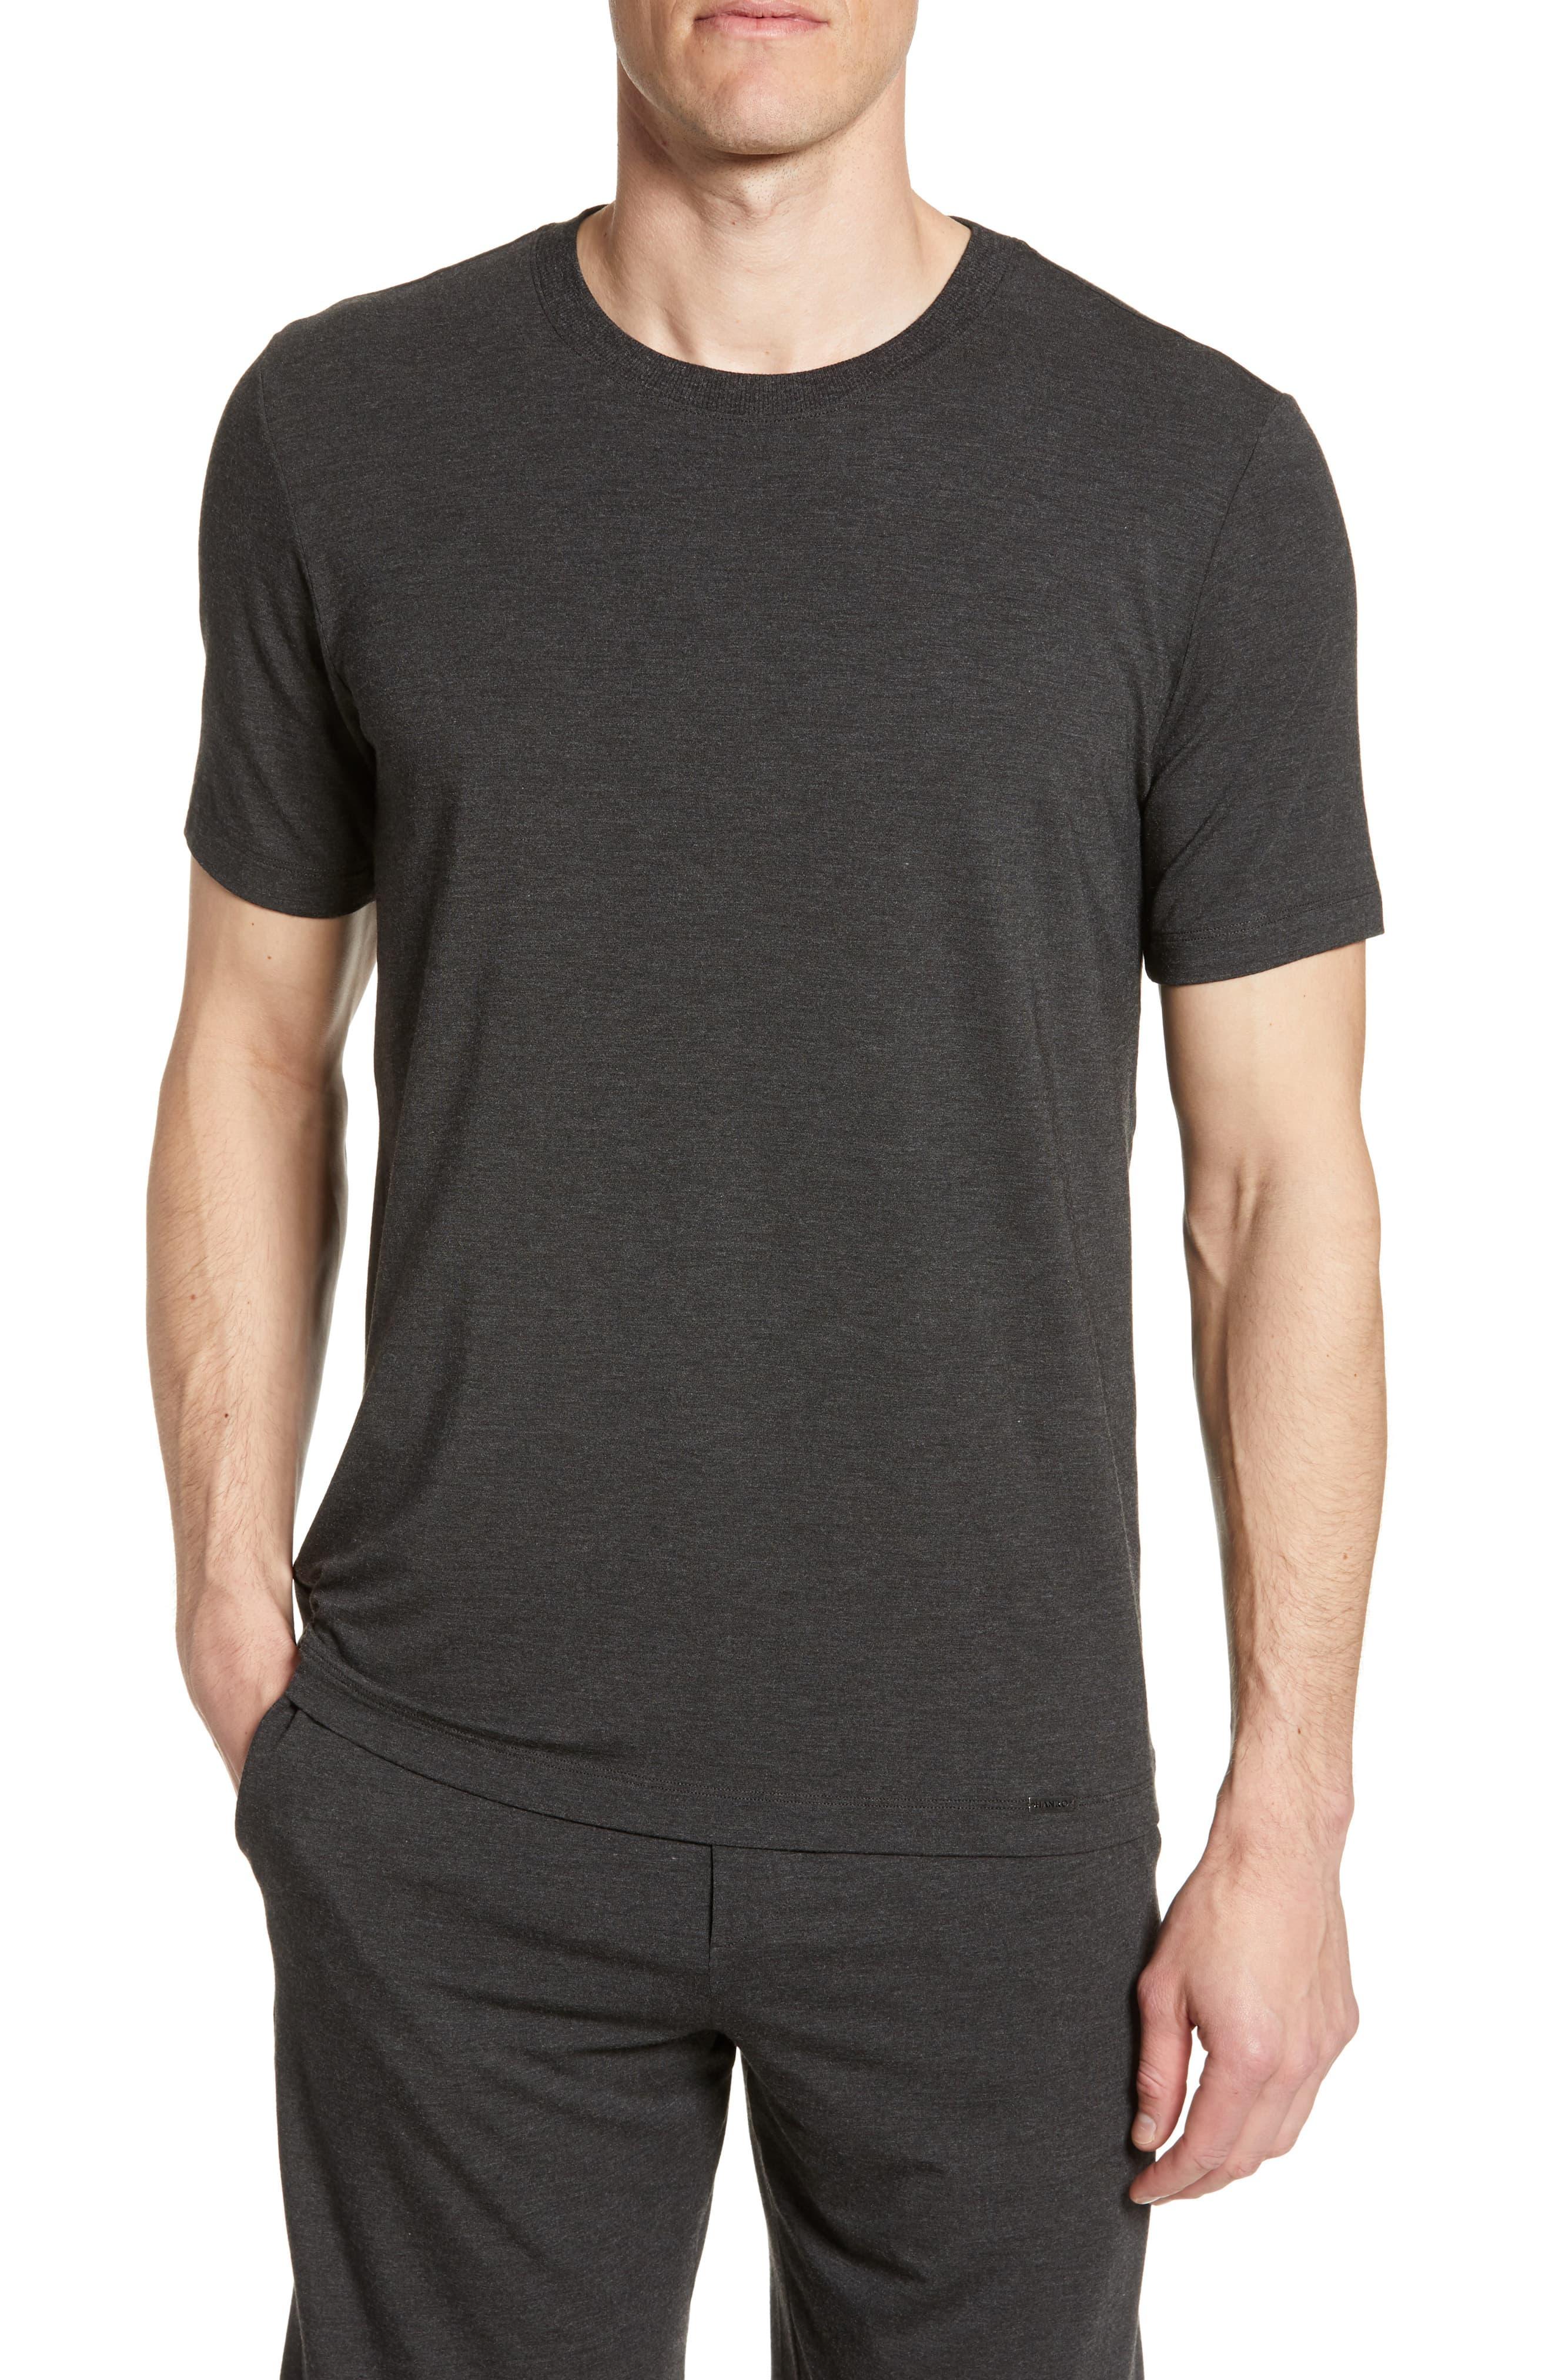 Hanro Casuals Crewneck T-shirt in Black for Men - Lyst